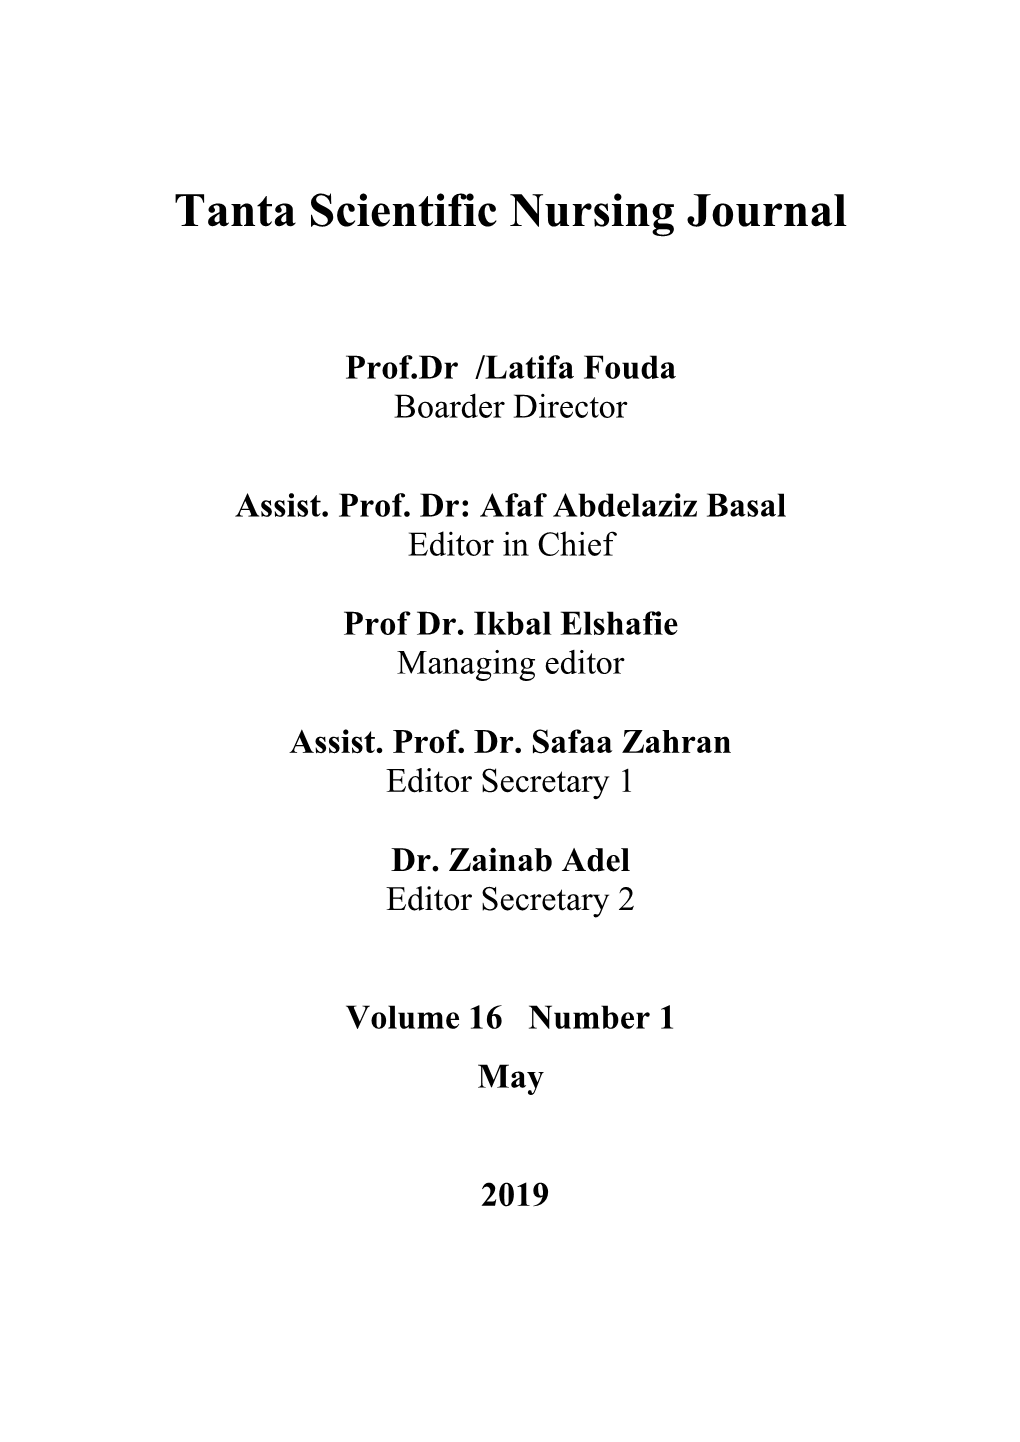 Tanta Scientific Nursing Journal.May 2019